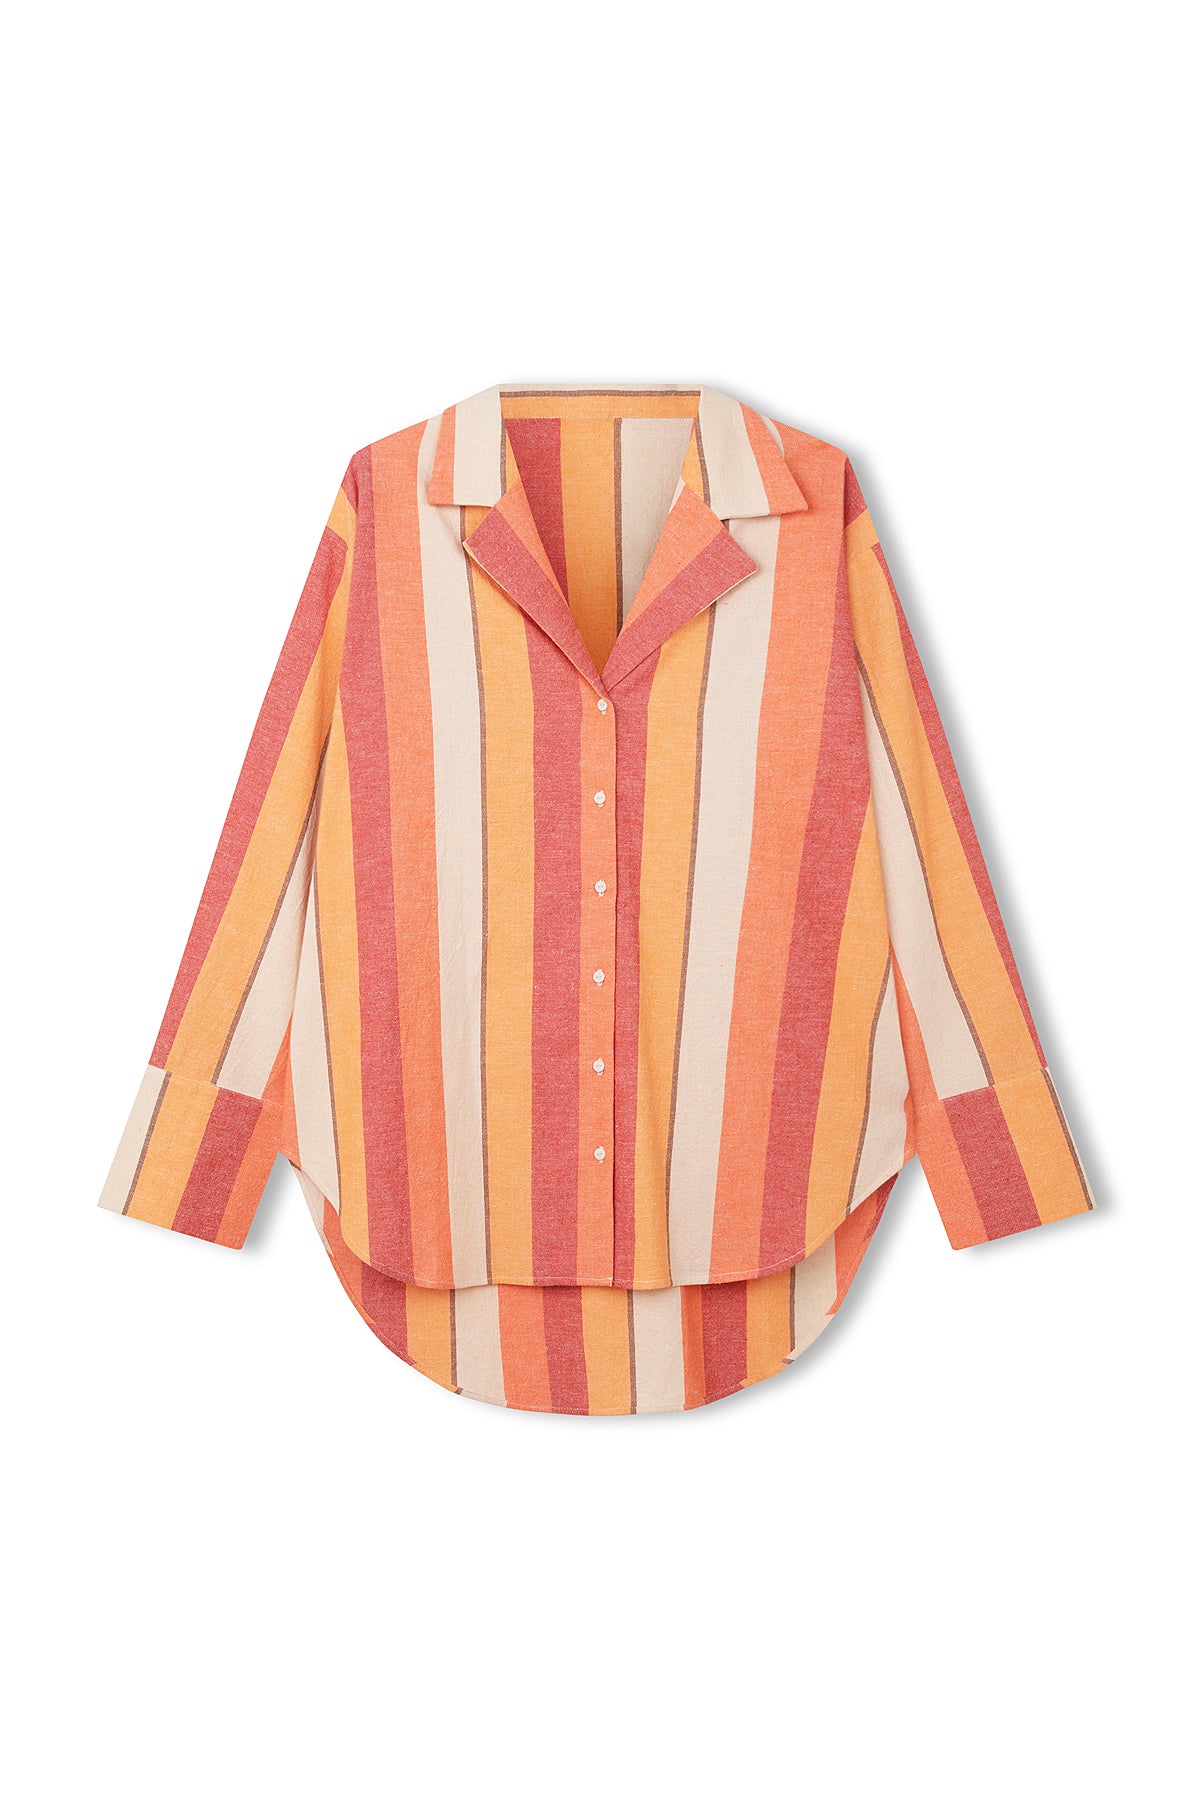 Zulu & Zephyr Sun Stripe Organic Cotton Shirt